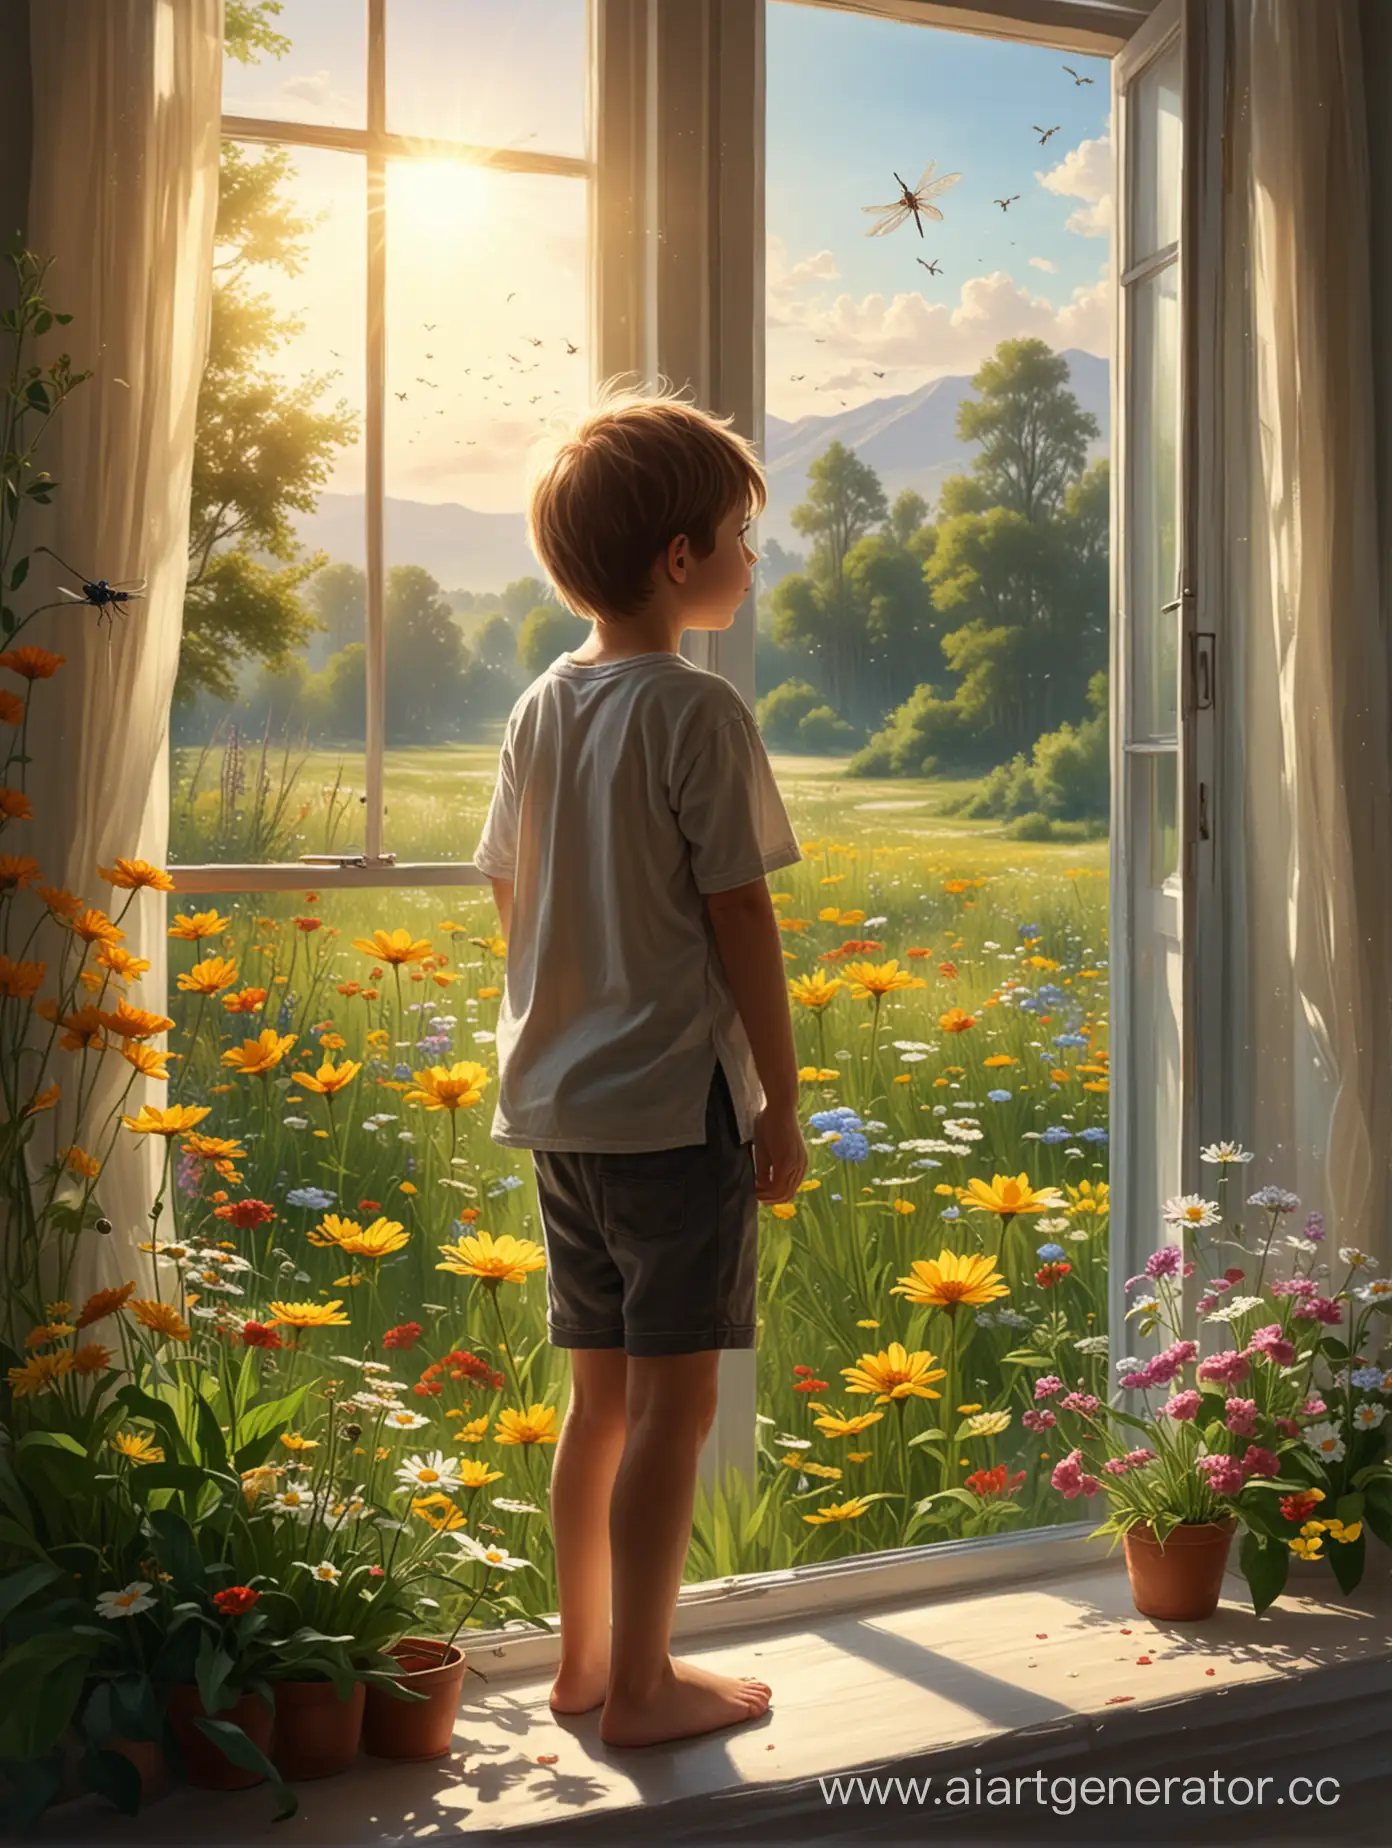 Boy-Admiring-Meadow-with-Dragonfly-in-Sunlit-Window-Scene